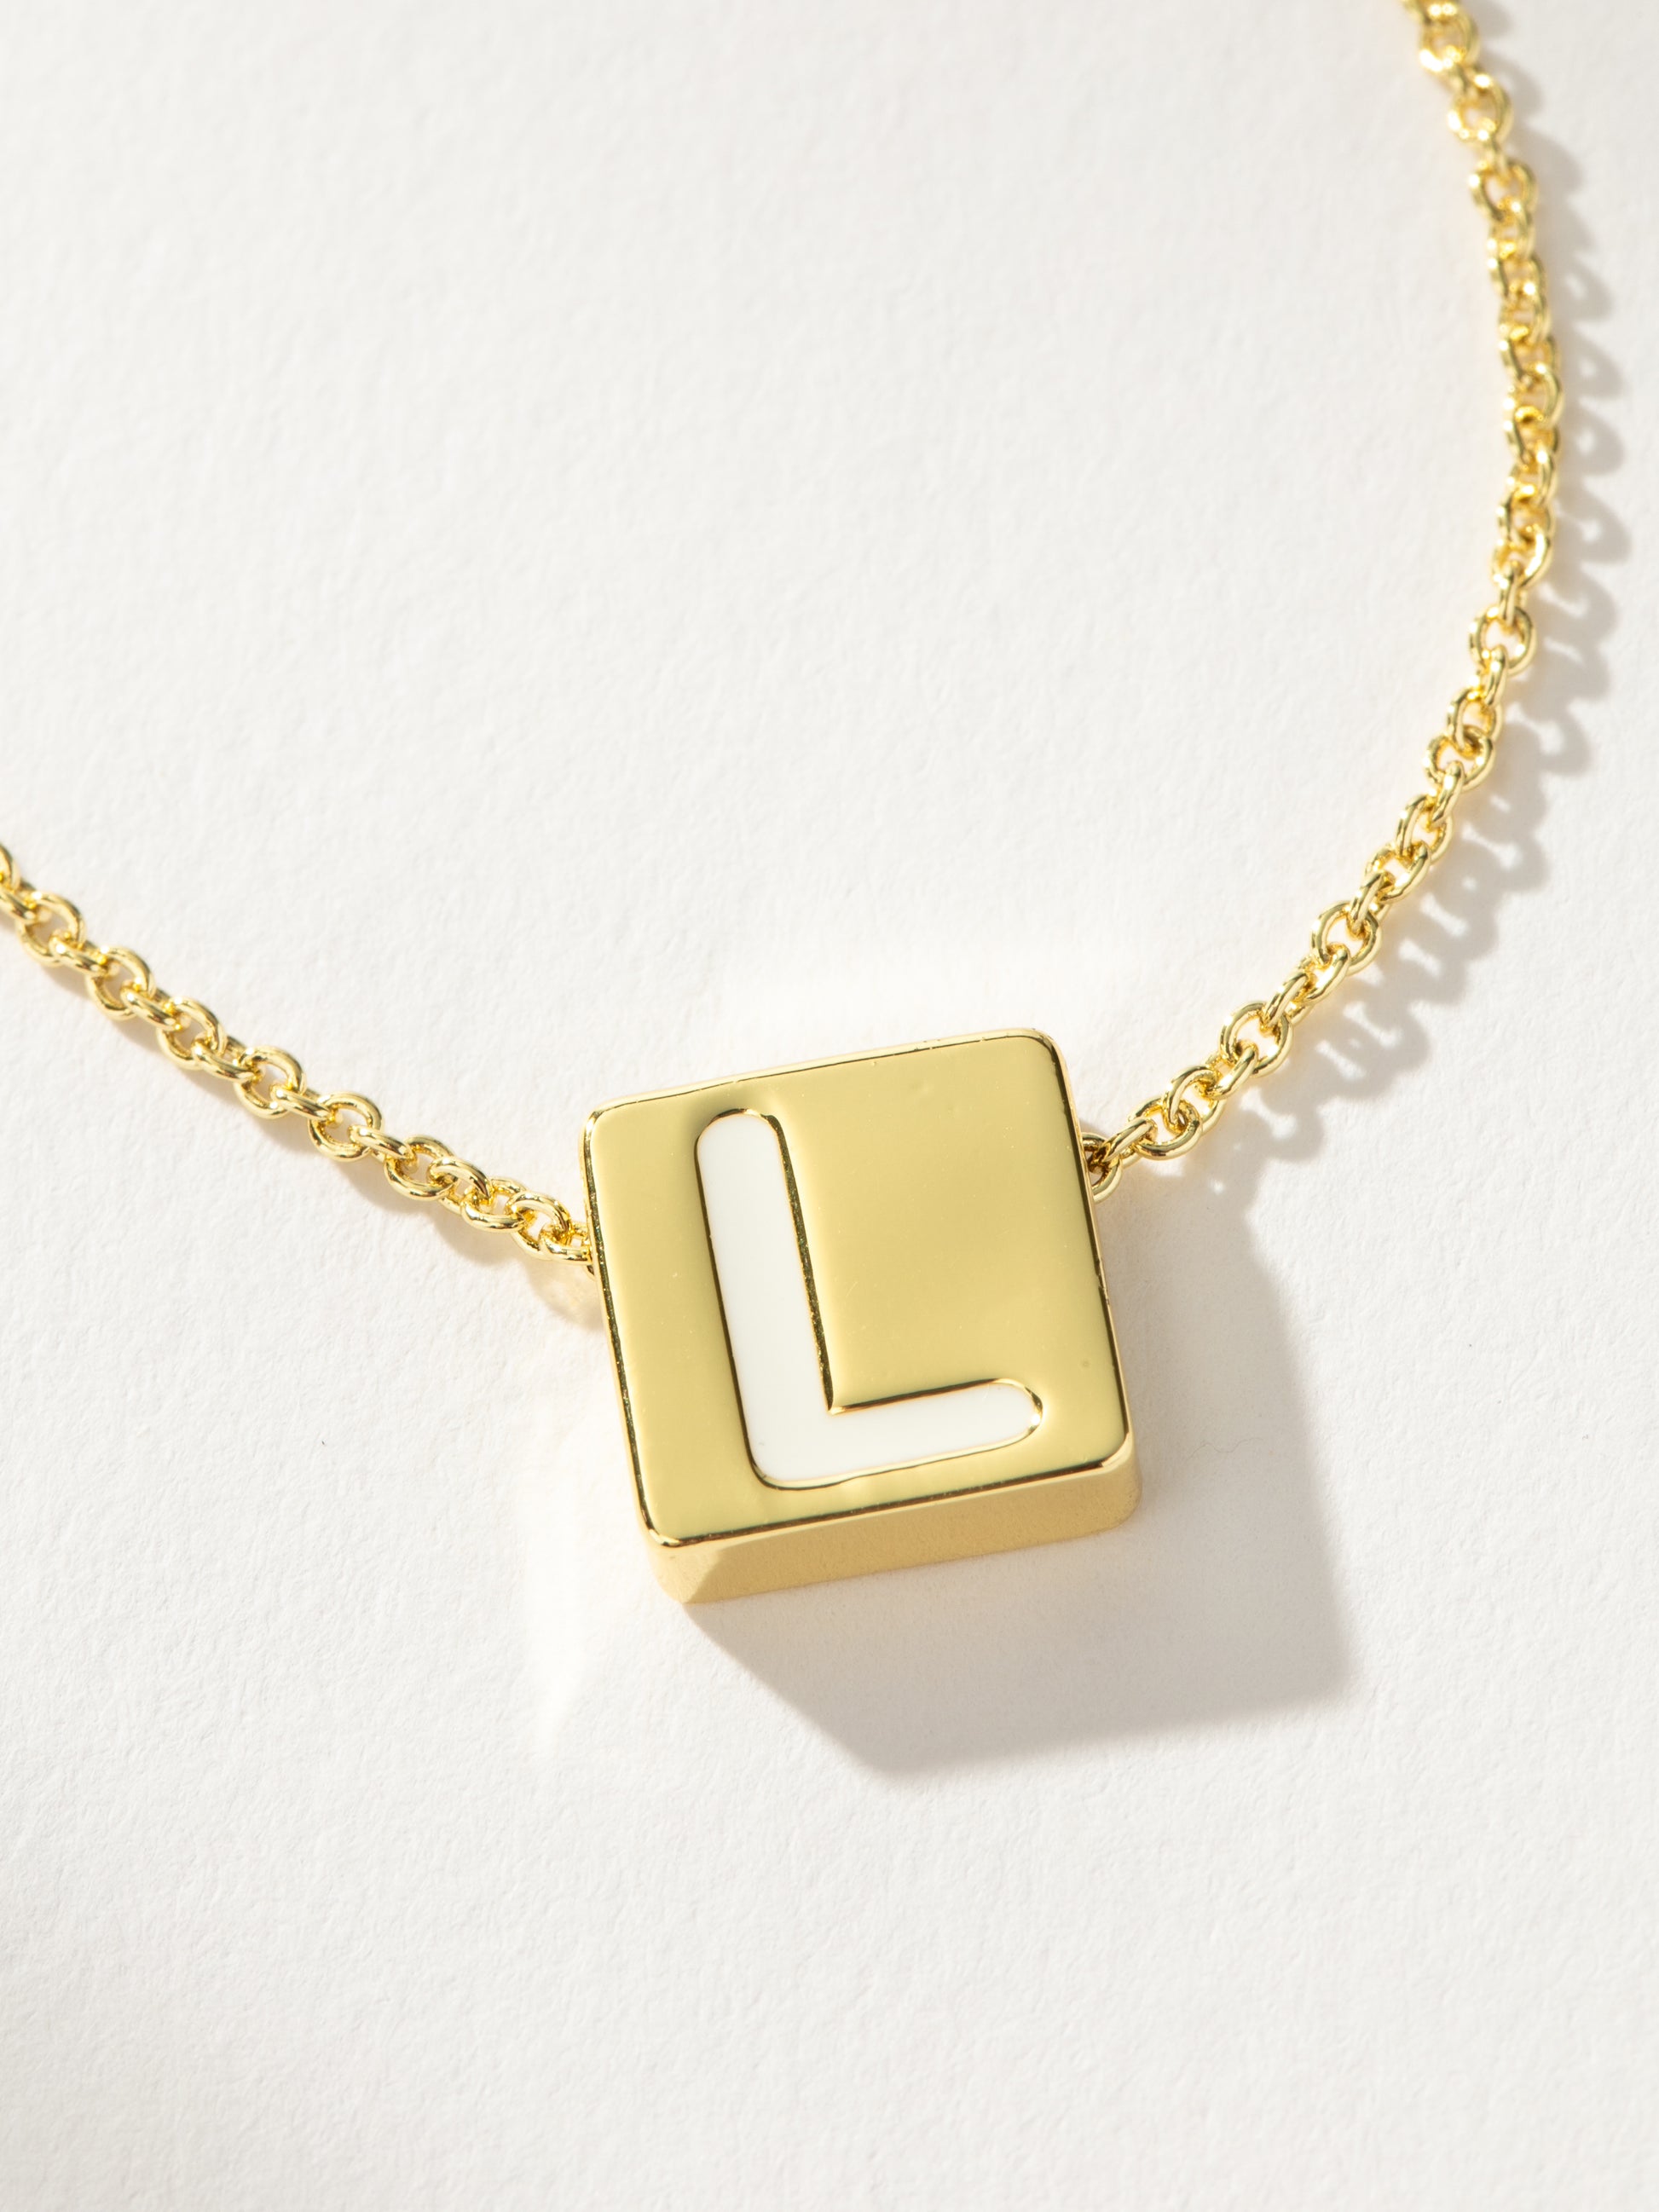 Bold Letter Necklace | Gold L | Product Detail Image | Uncommon James